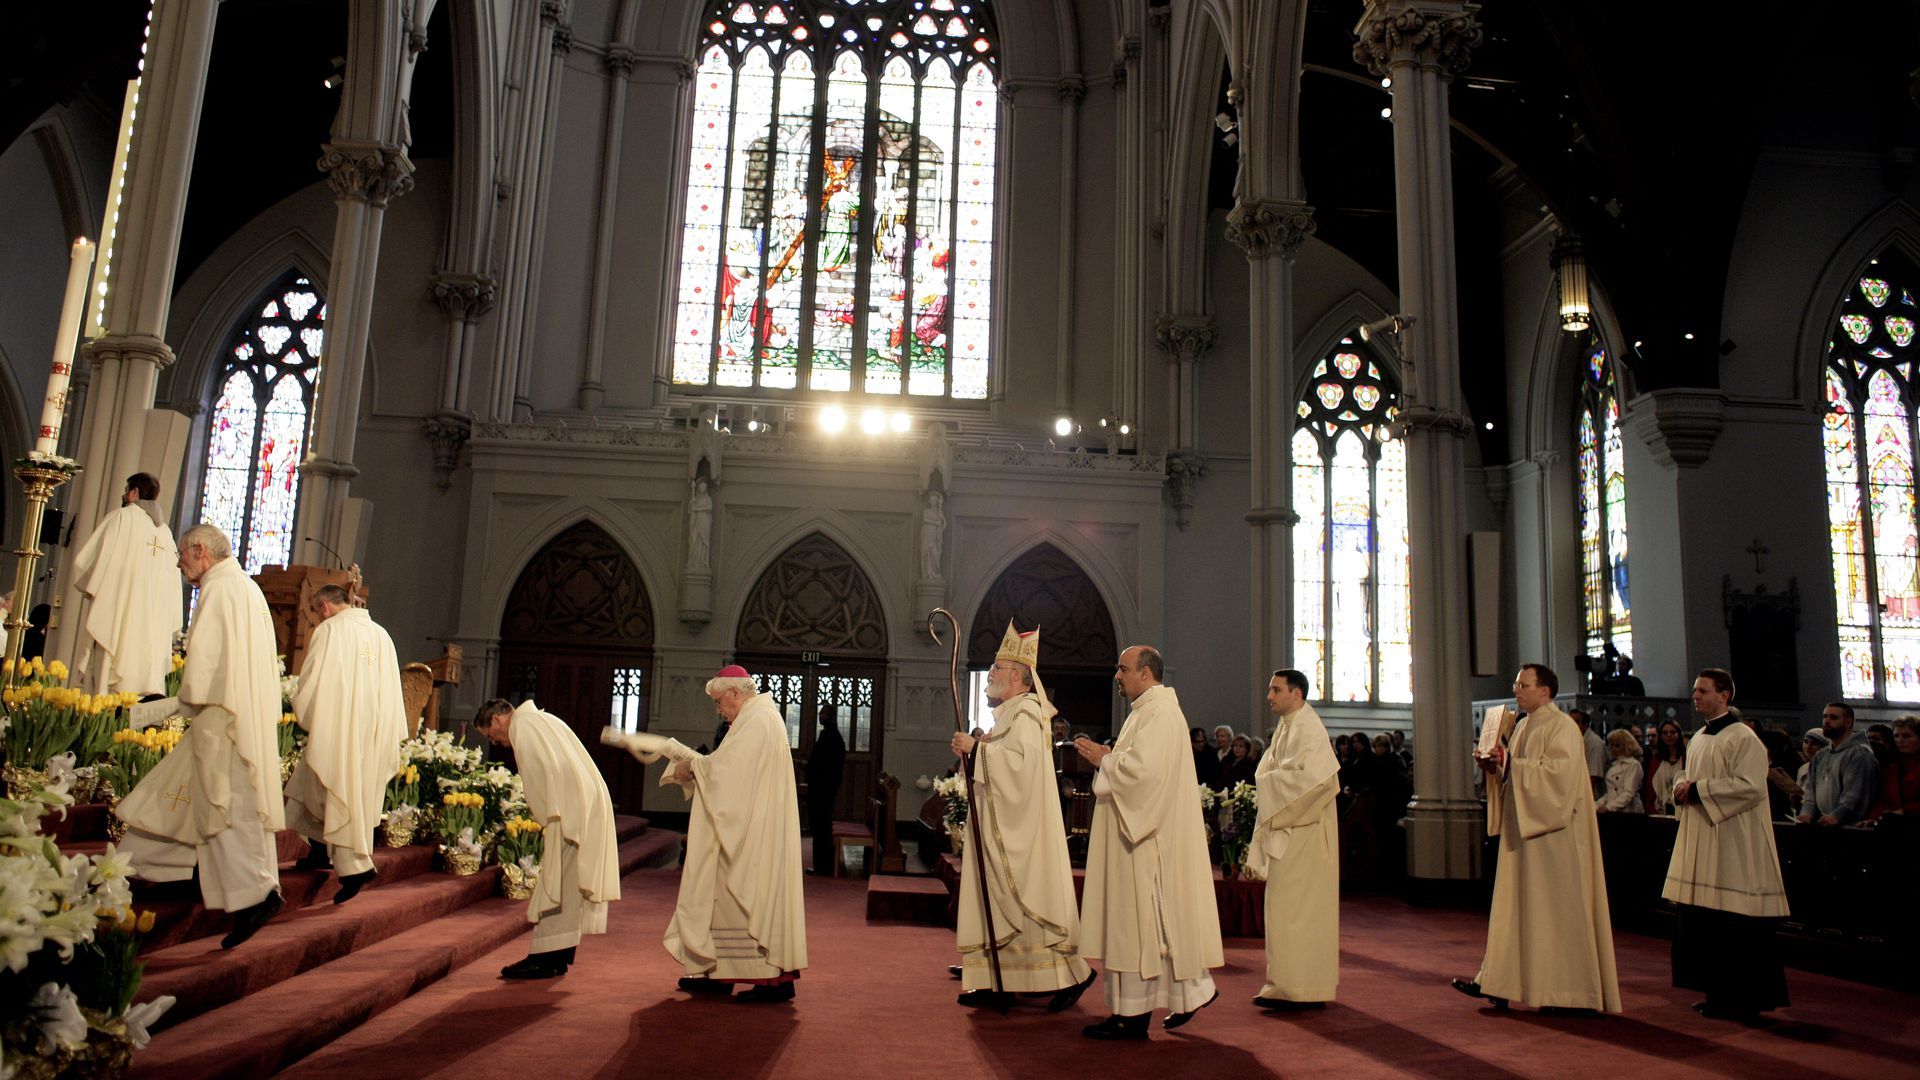 Priests inside a church